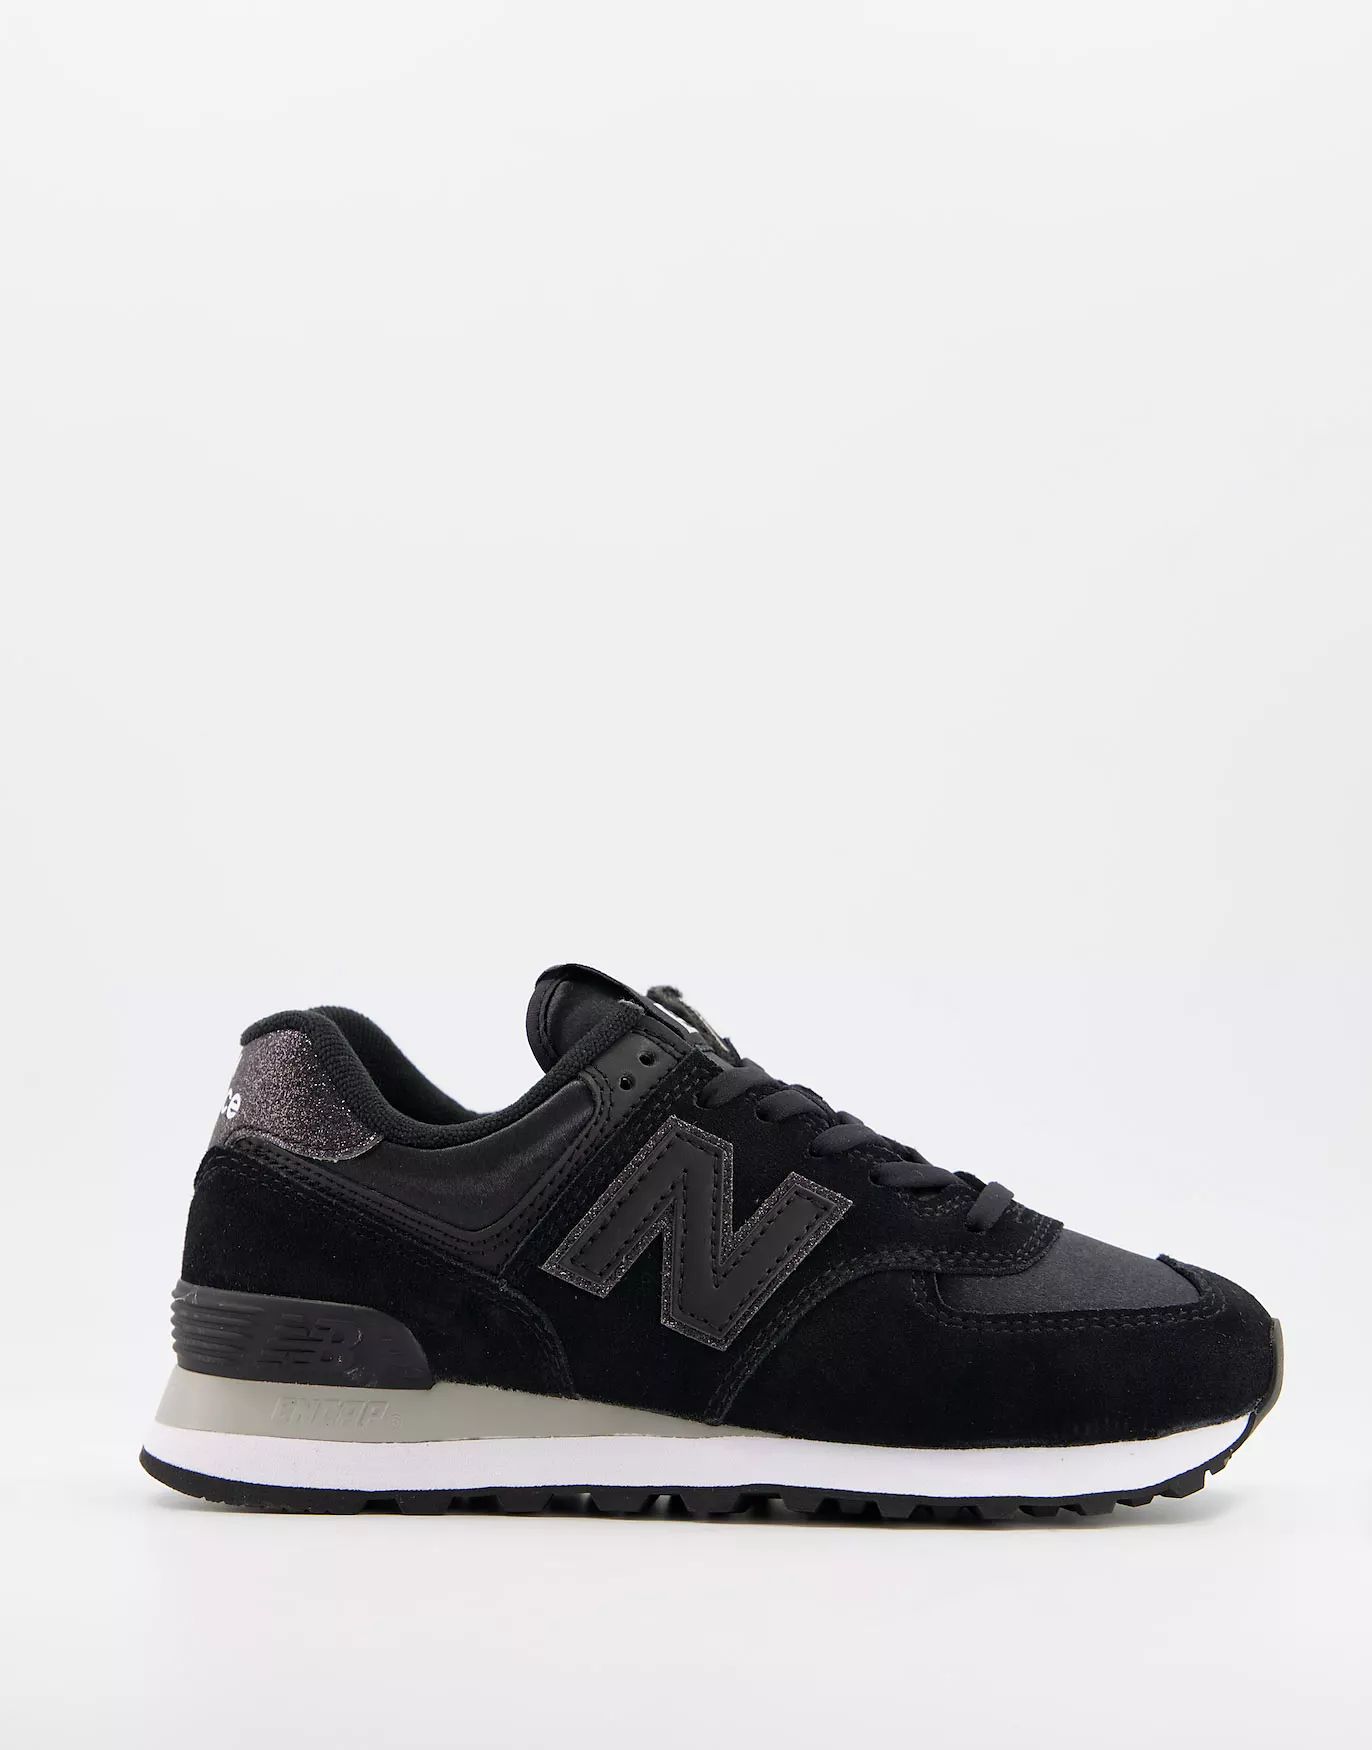 New Balance 574 sneakers in black | ASOS (Global)